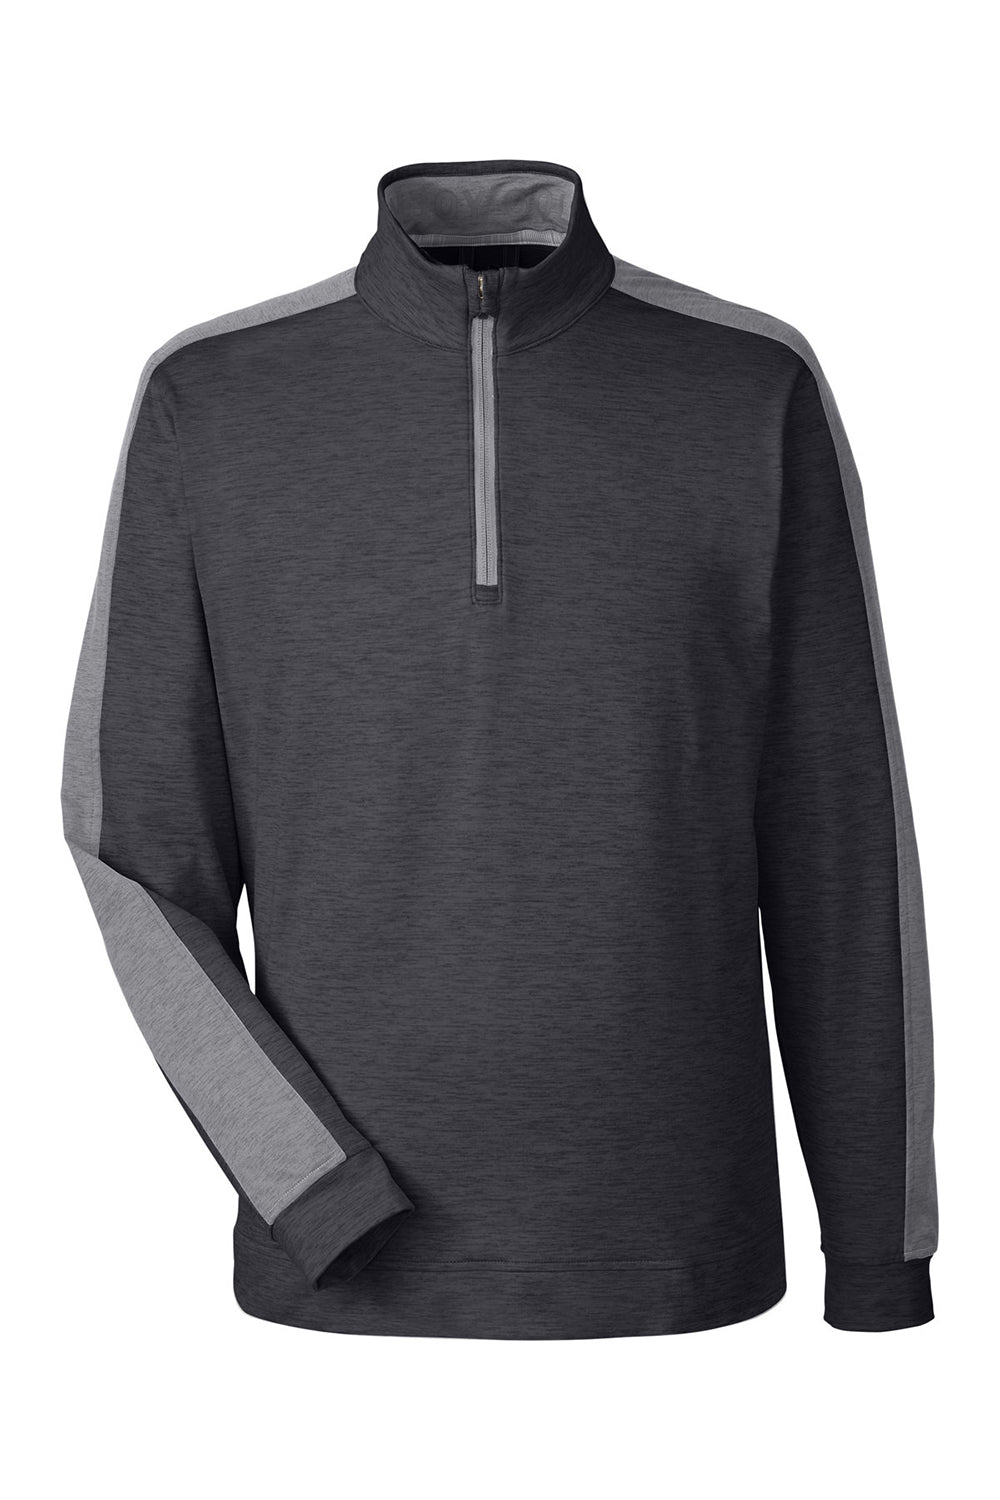 Puma 599129 Mens Cloudspun 1/4 Zip Sweatshirt Heather Black/Quiet Shade Grey Flat Front